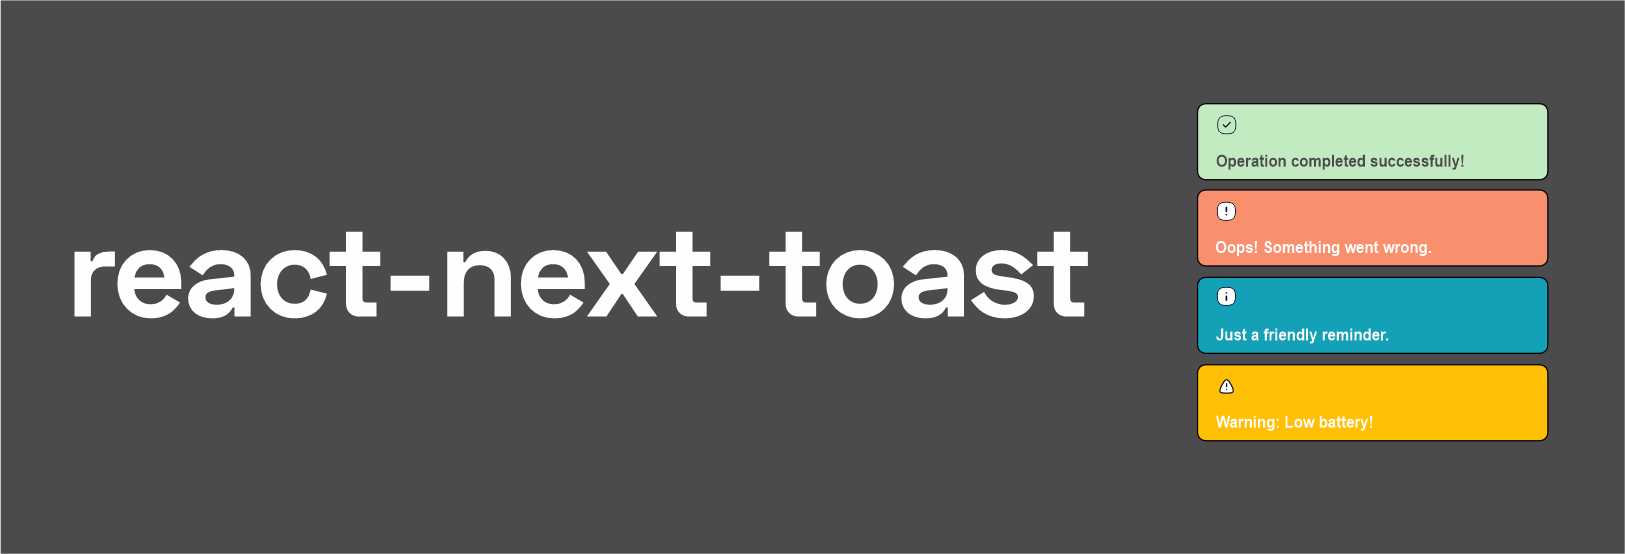 react-next-toast